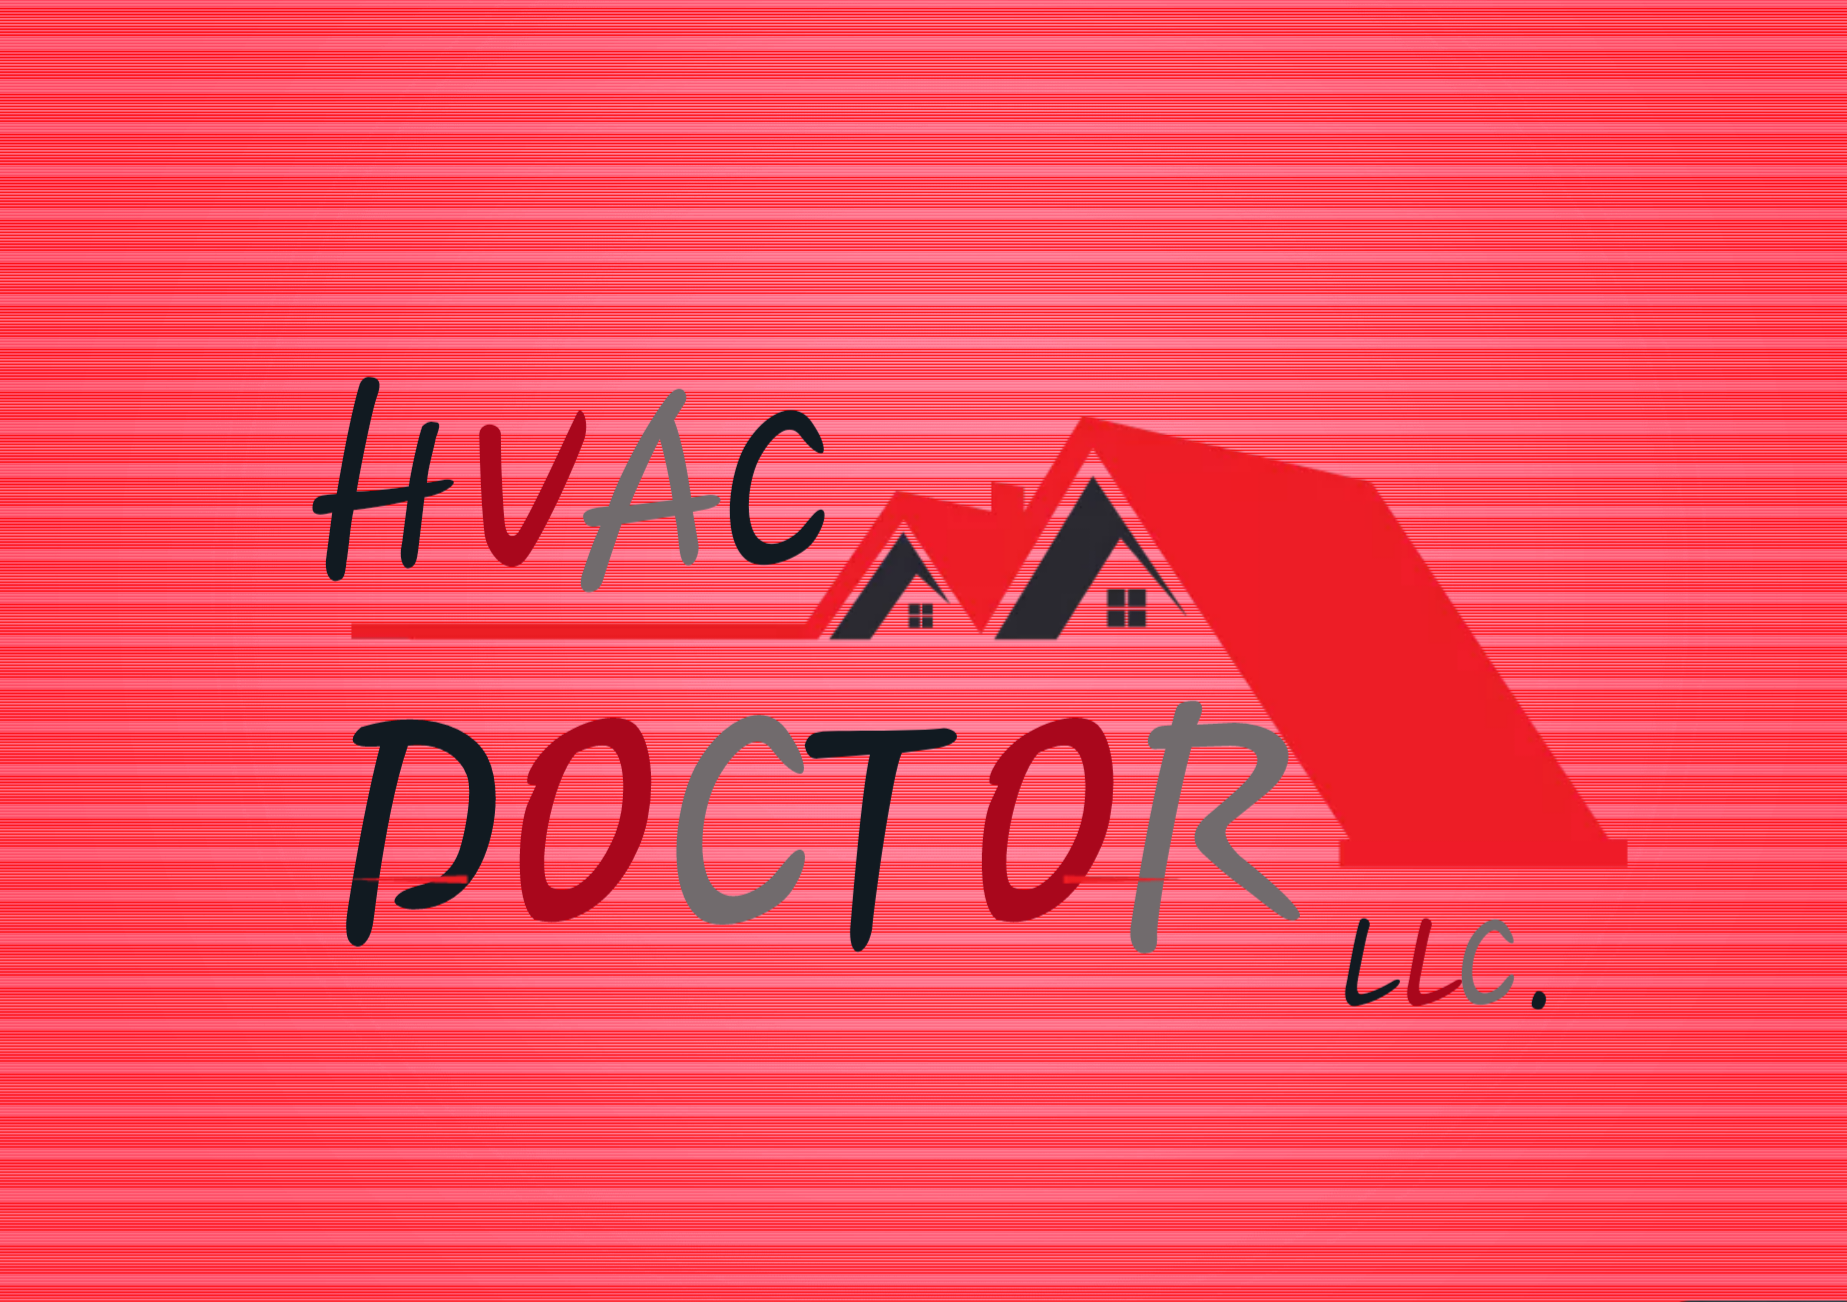 HVAC Doctor LLC Logo